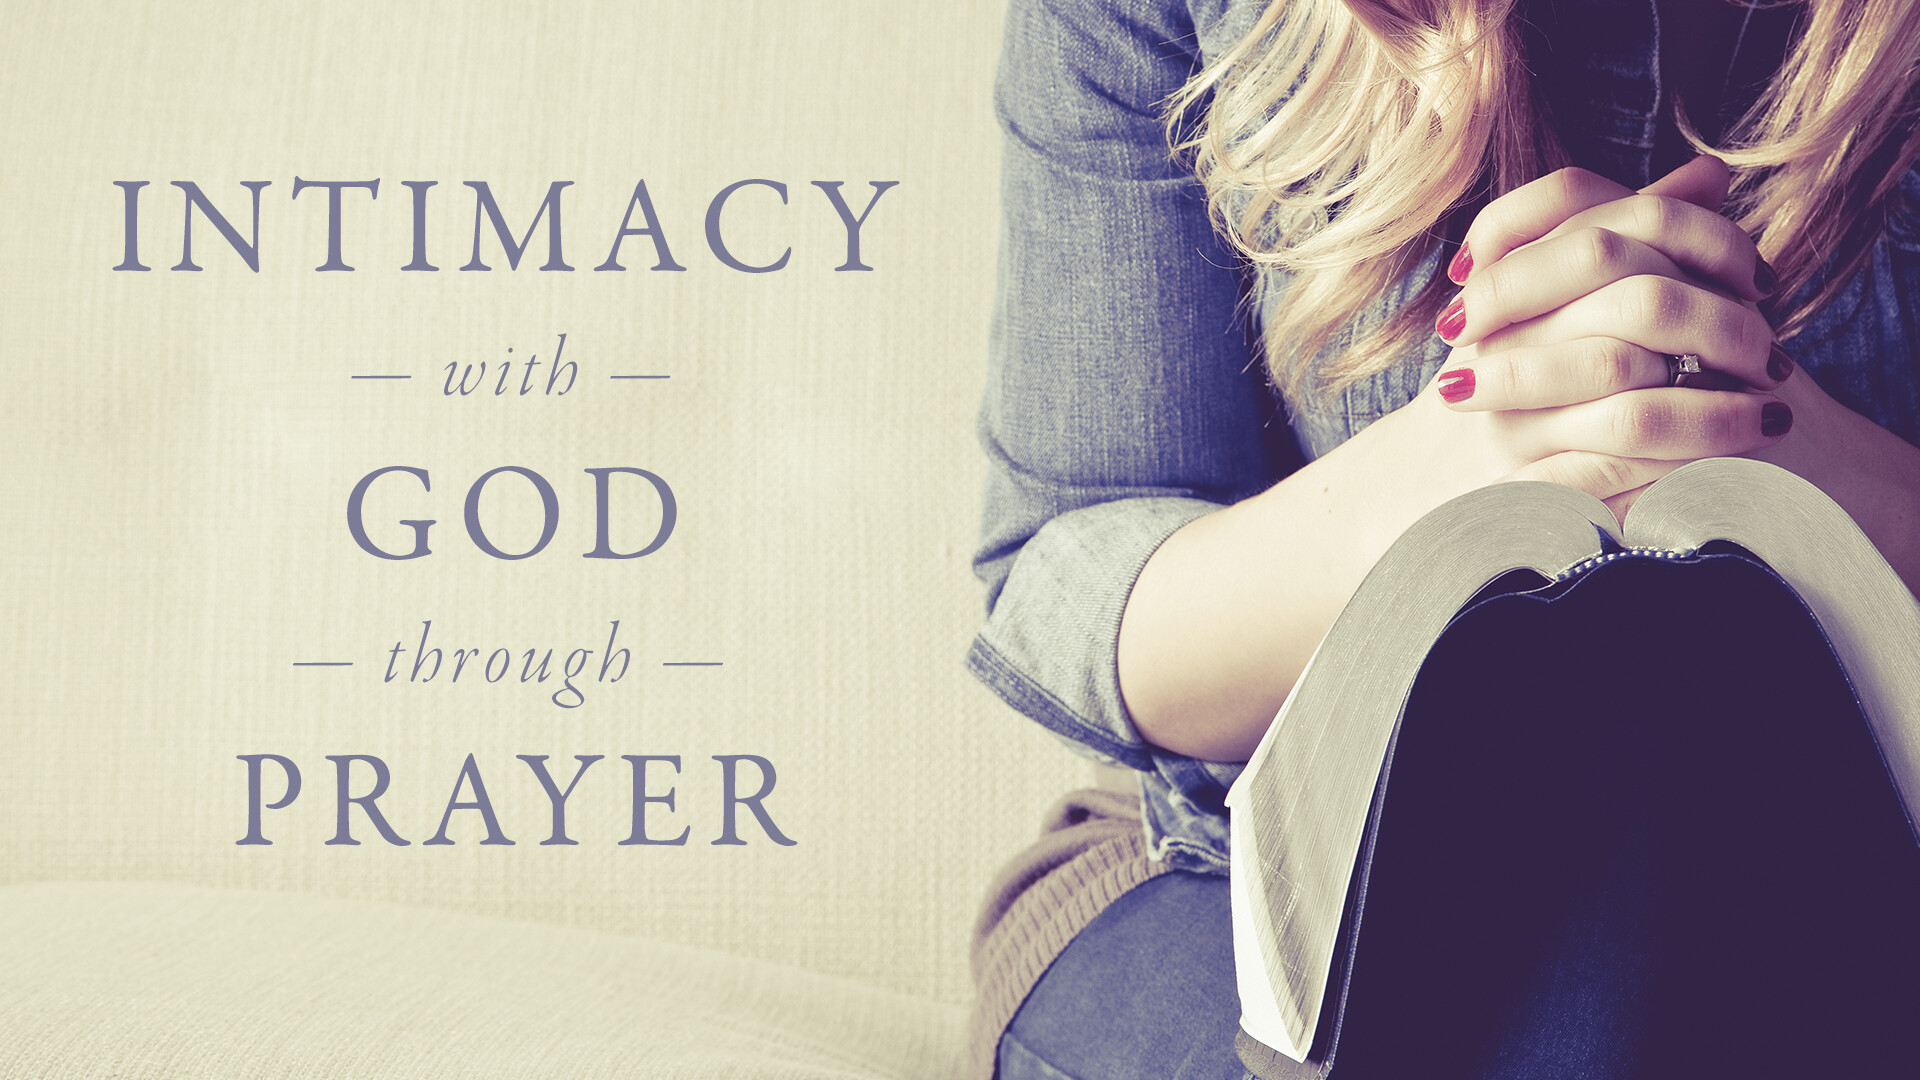 Intimacy with God through Prayer